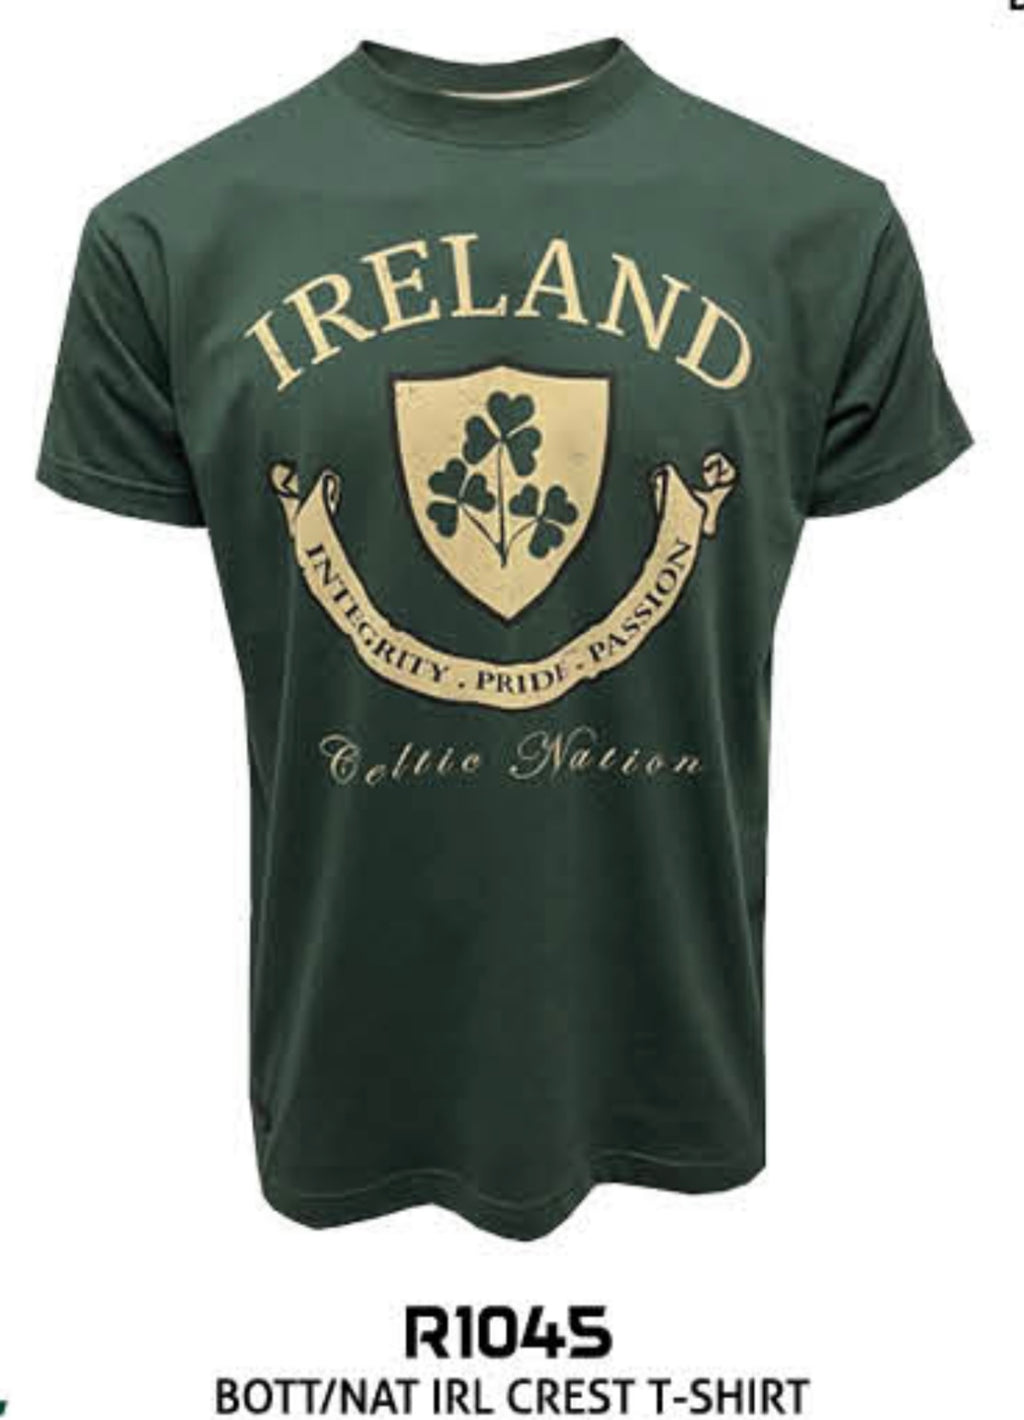 Mens Ireland Tee R1045